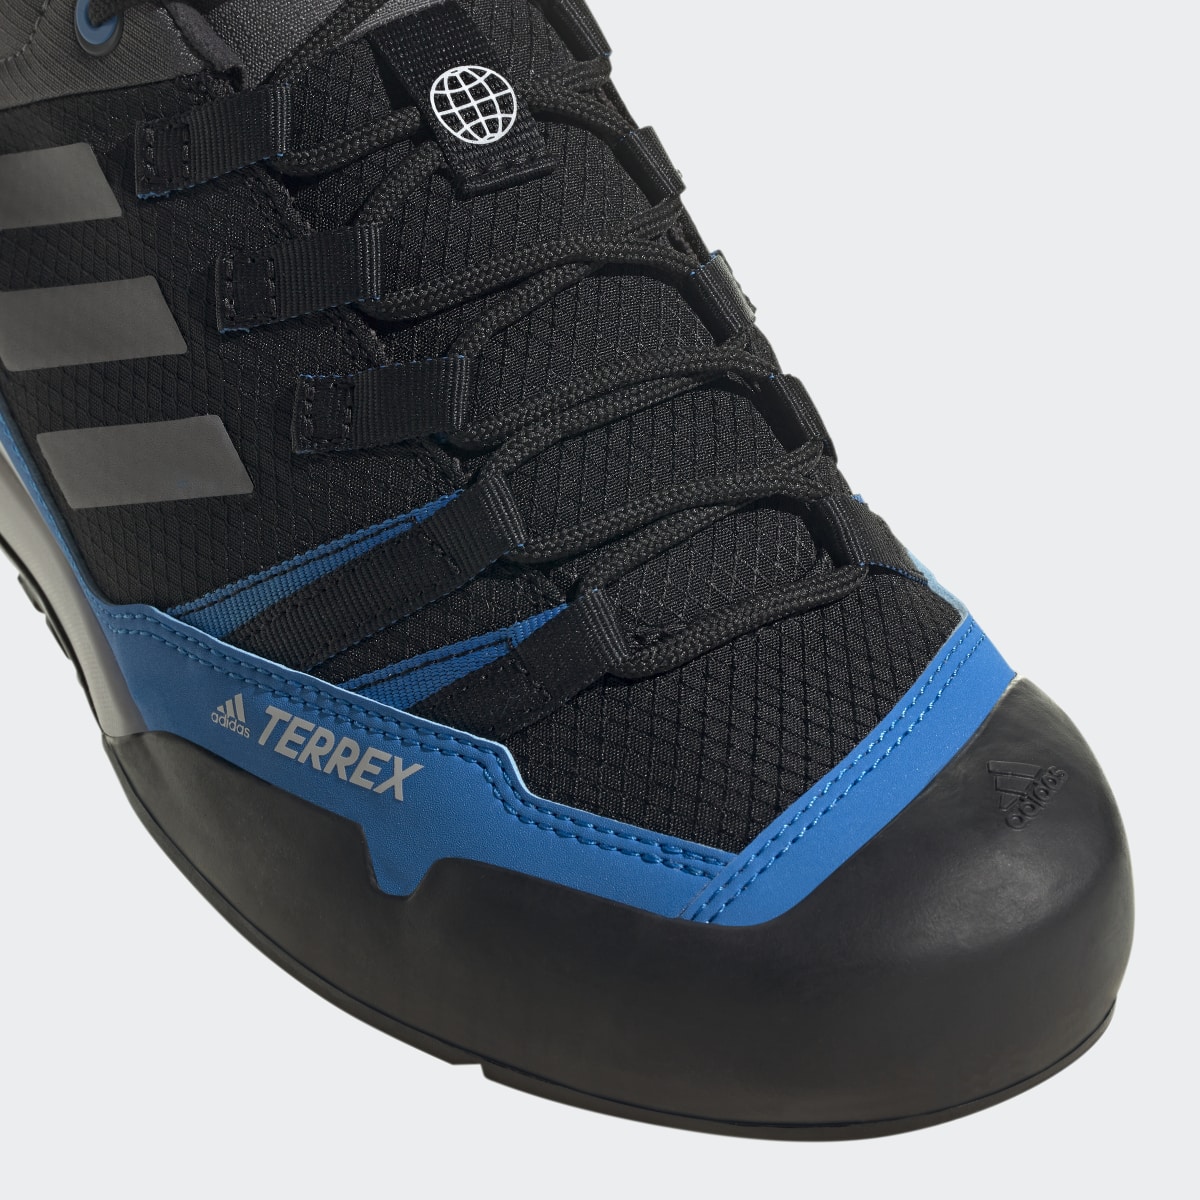 Adidas Terrex Swift Solo Approach Shoes. 9